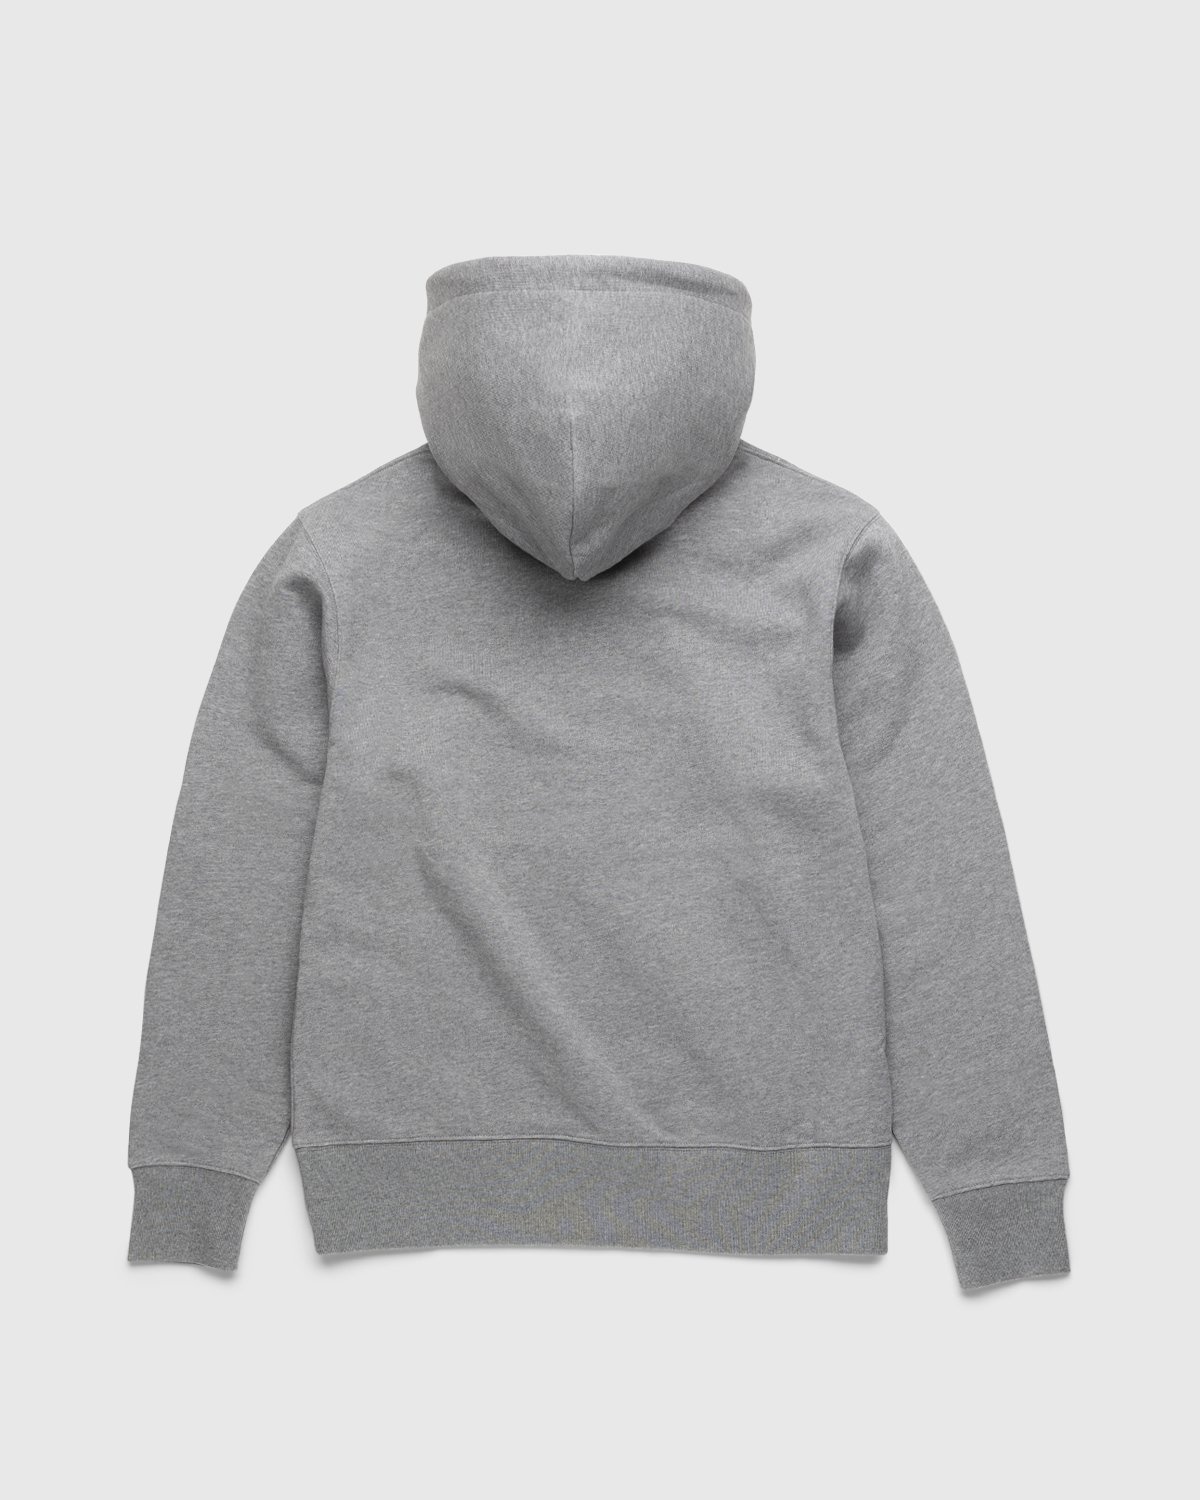 Acne Studios – Organic Cotton Hooded Sweatshirt Light Grey Melange - Hoodies - Grey - Image 2